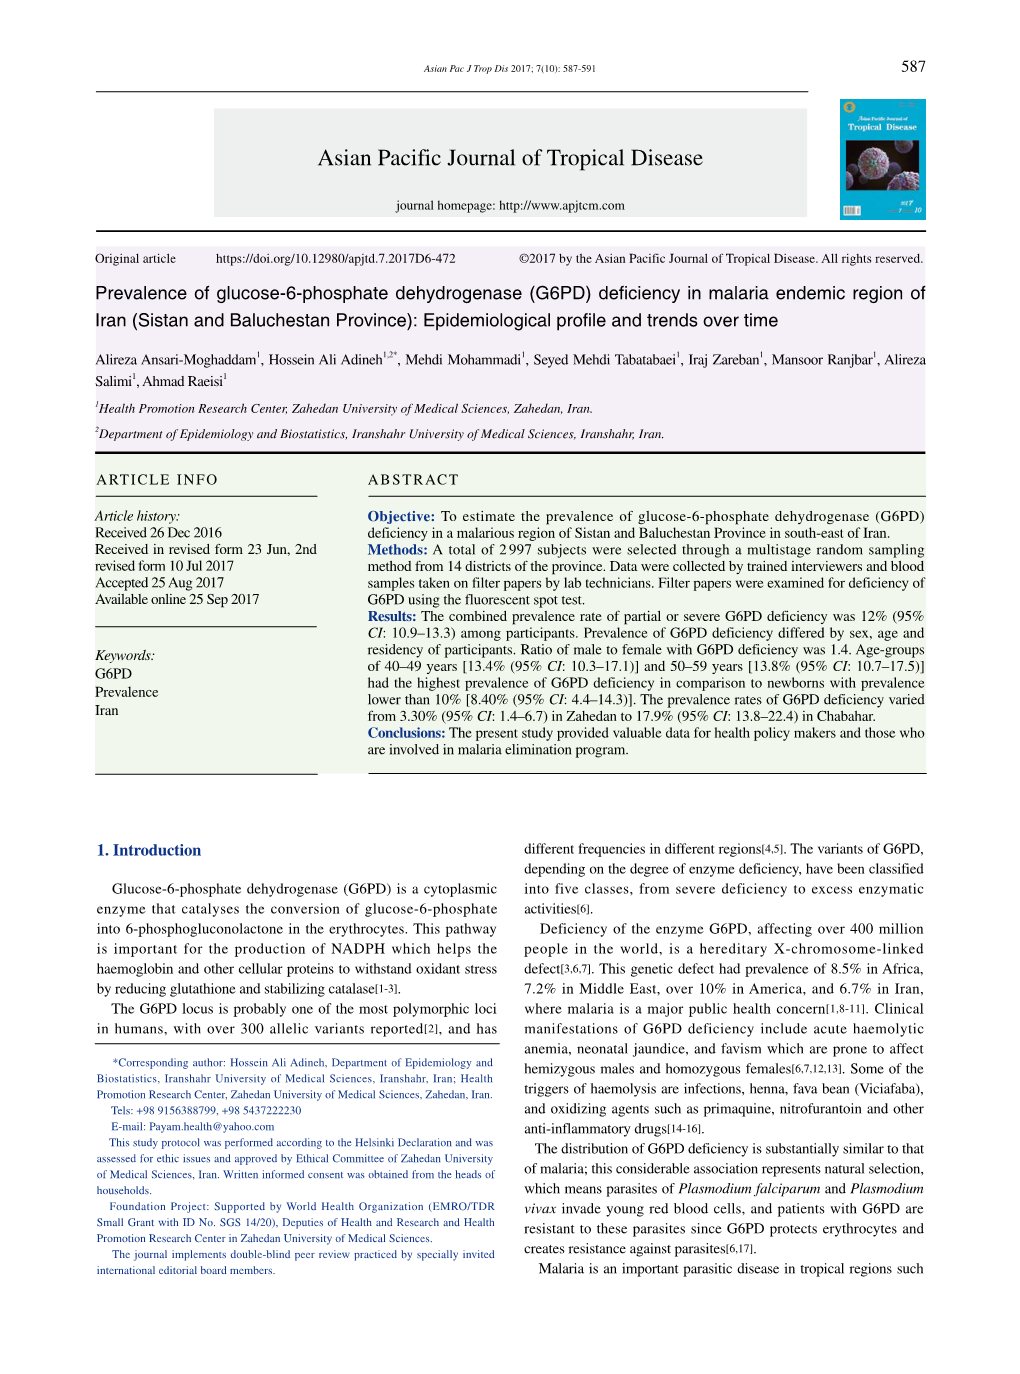 Prevalence of Glucose-6-Phosphate Dehydrogenase (G6PD)